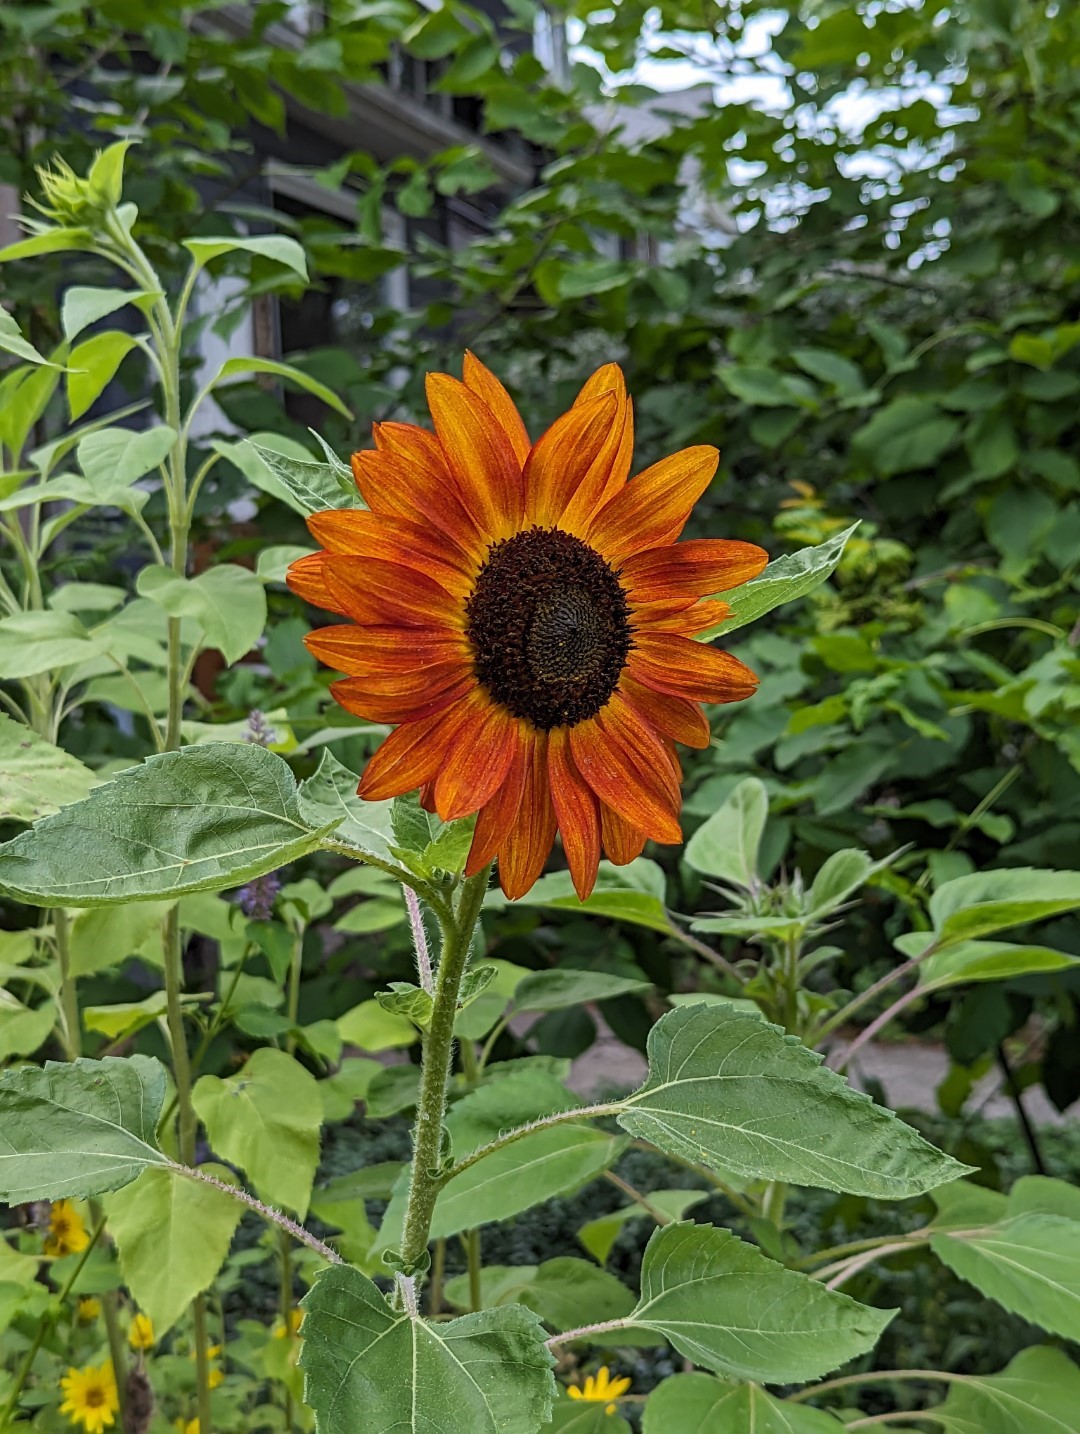 a rusty-orange variety of sunflower in bloom.